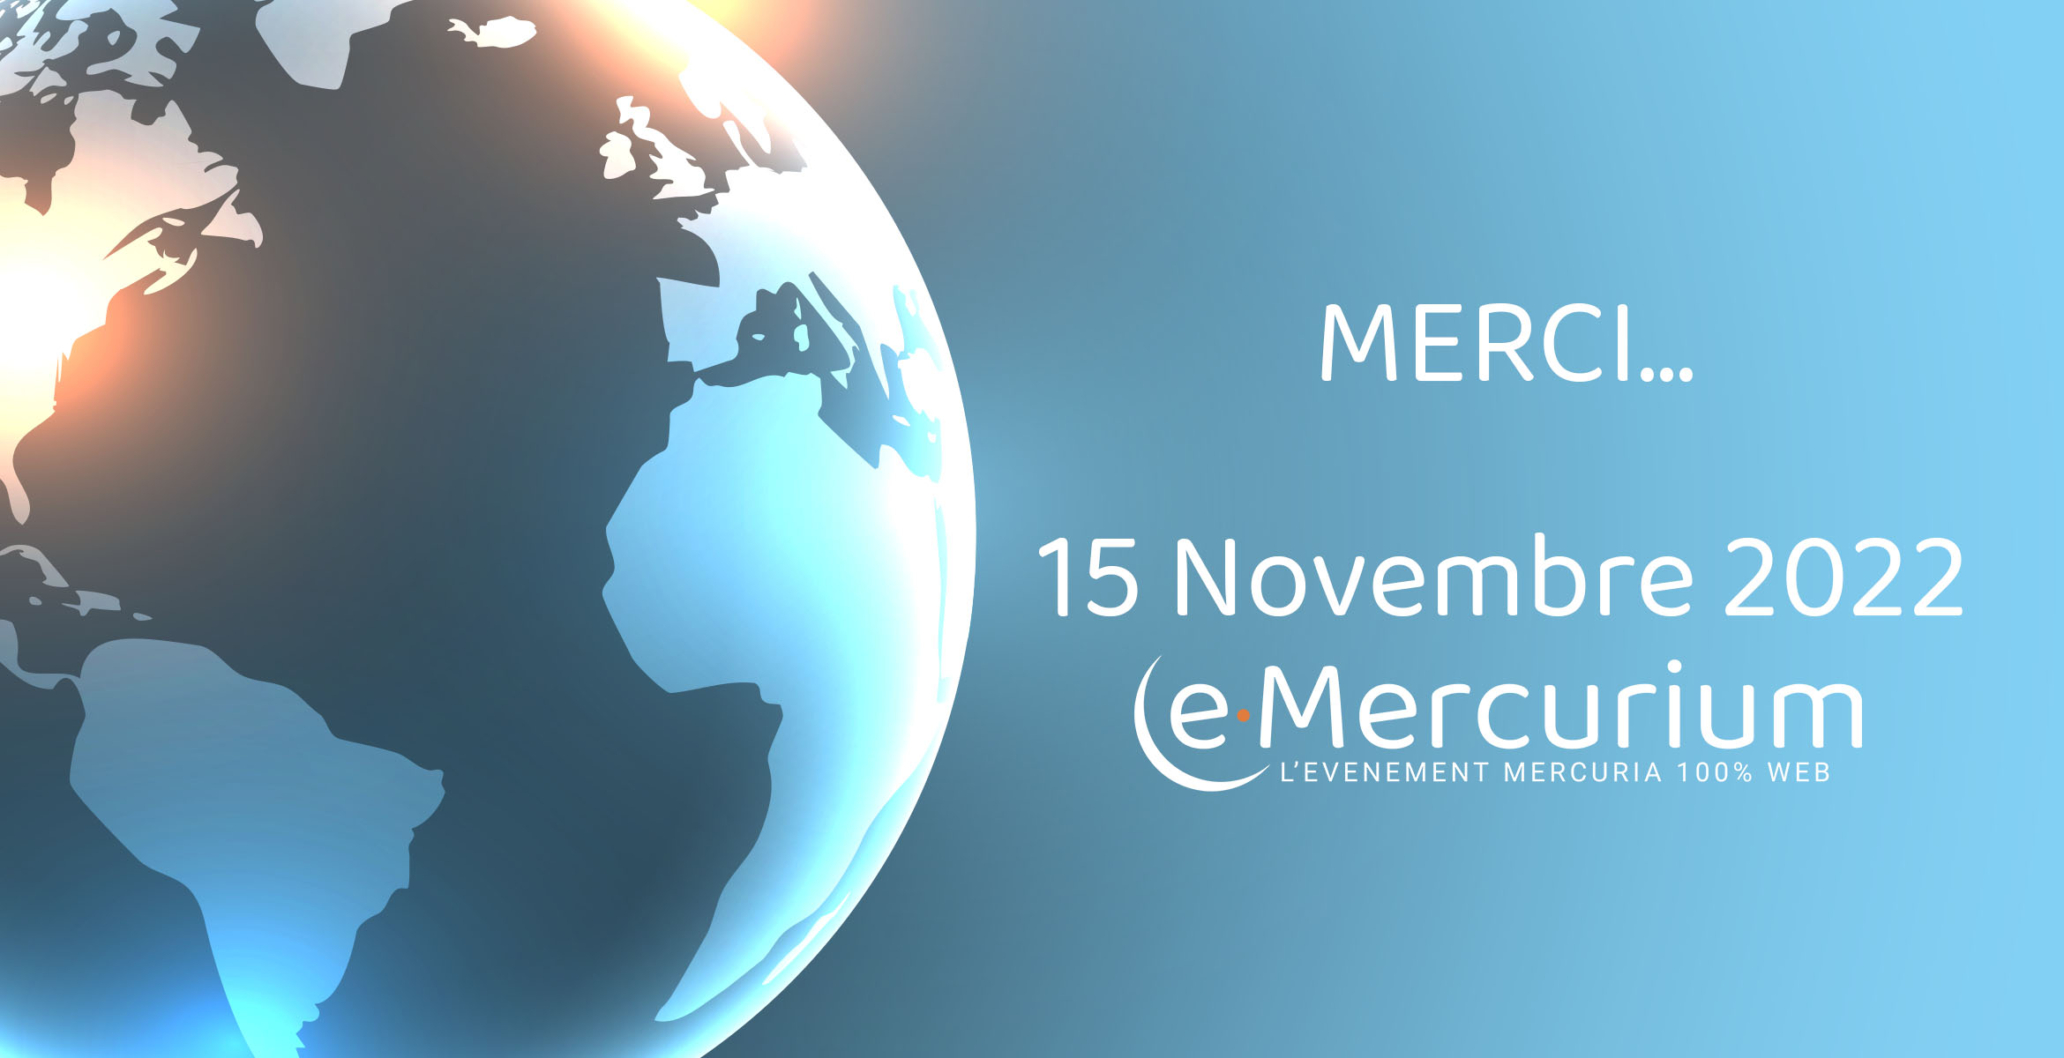 e-Mercurium 2022 merci mercuria evenement digital